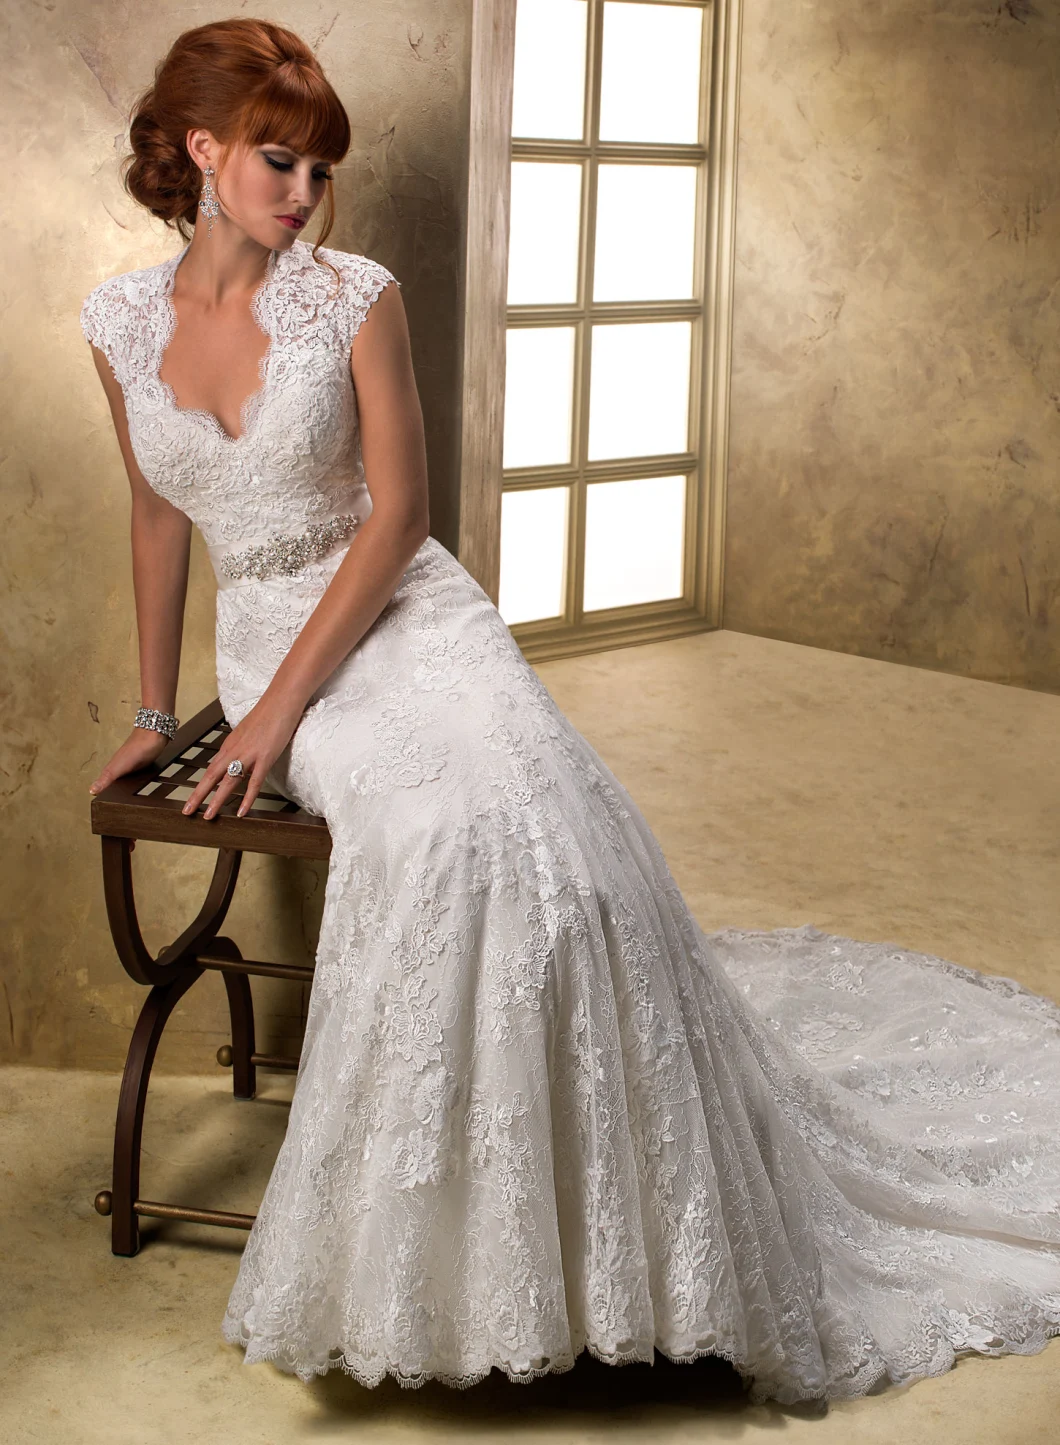 Crystal Belt Lace Wedding Bridal Dress Mermai Bridal Dress Keyhole Back Wedding Dress